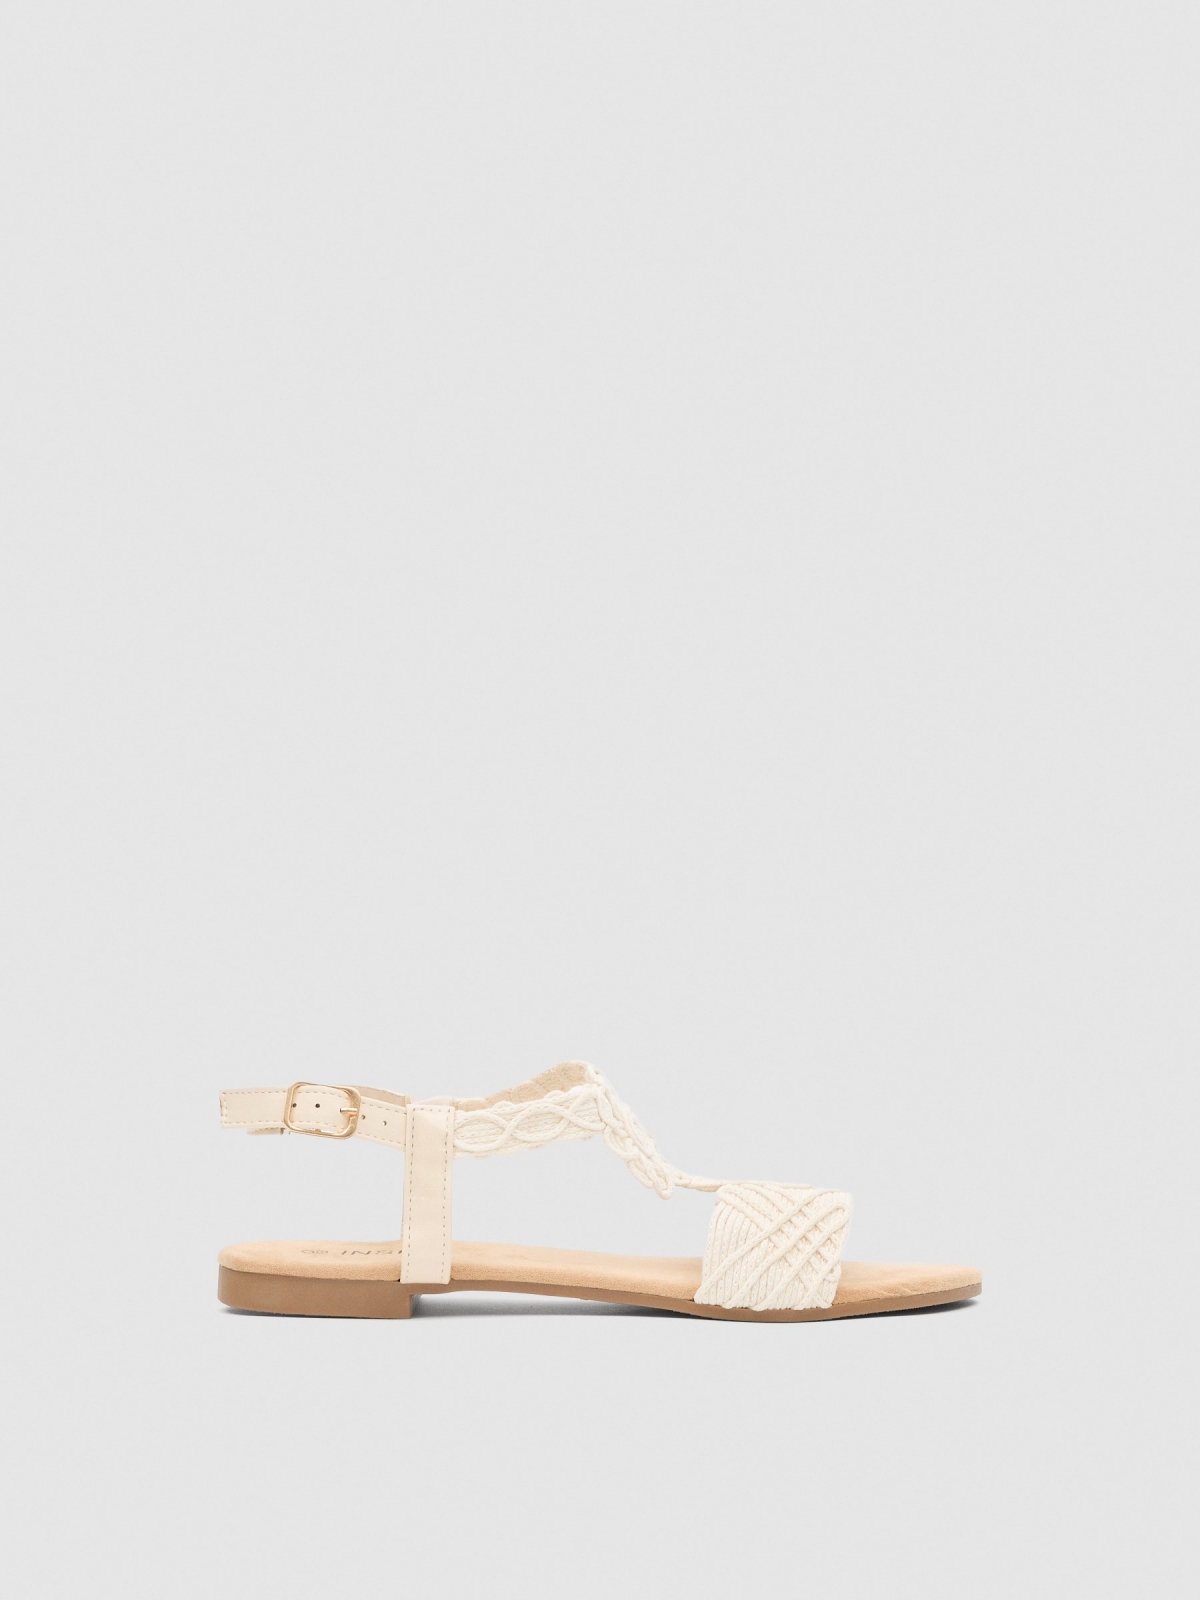 Macrame sandal off white